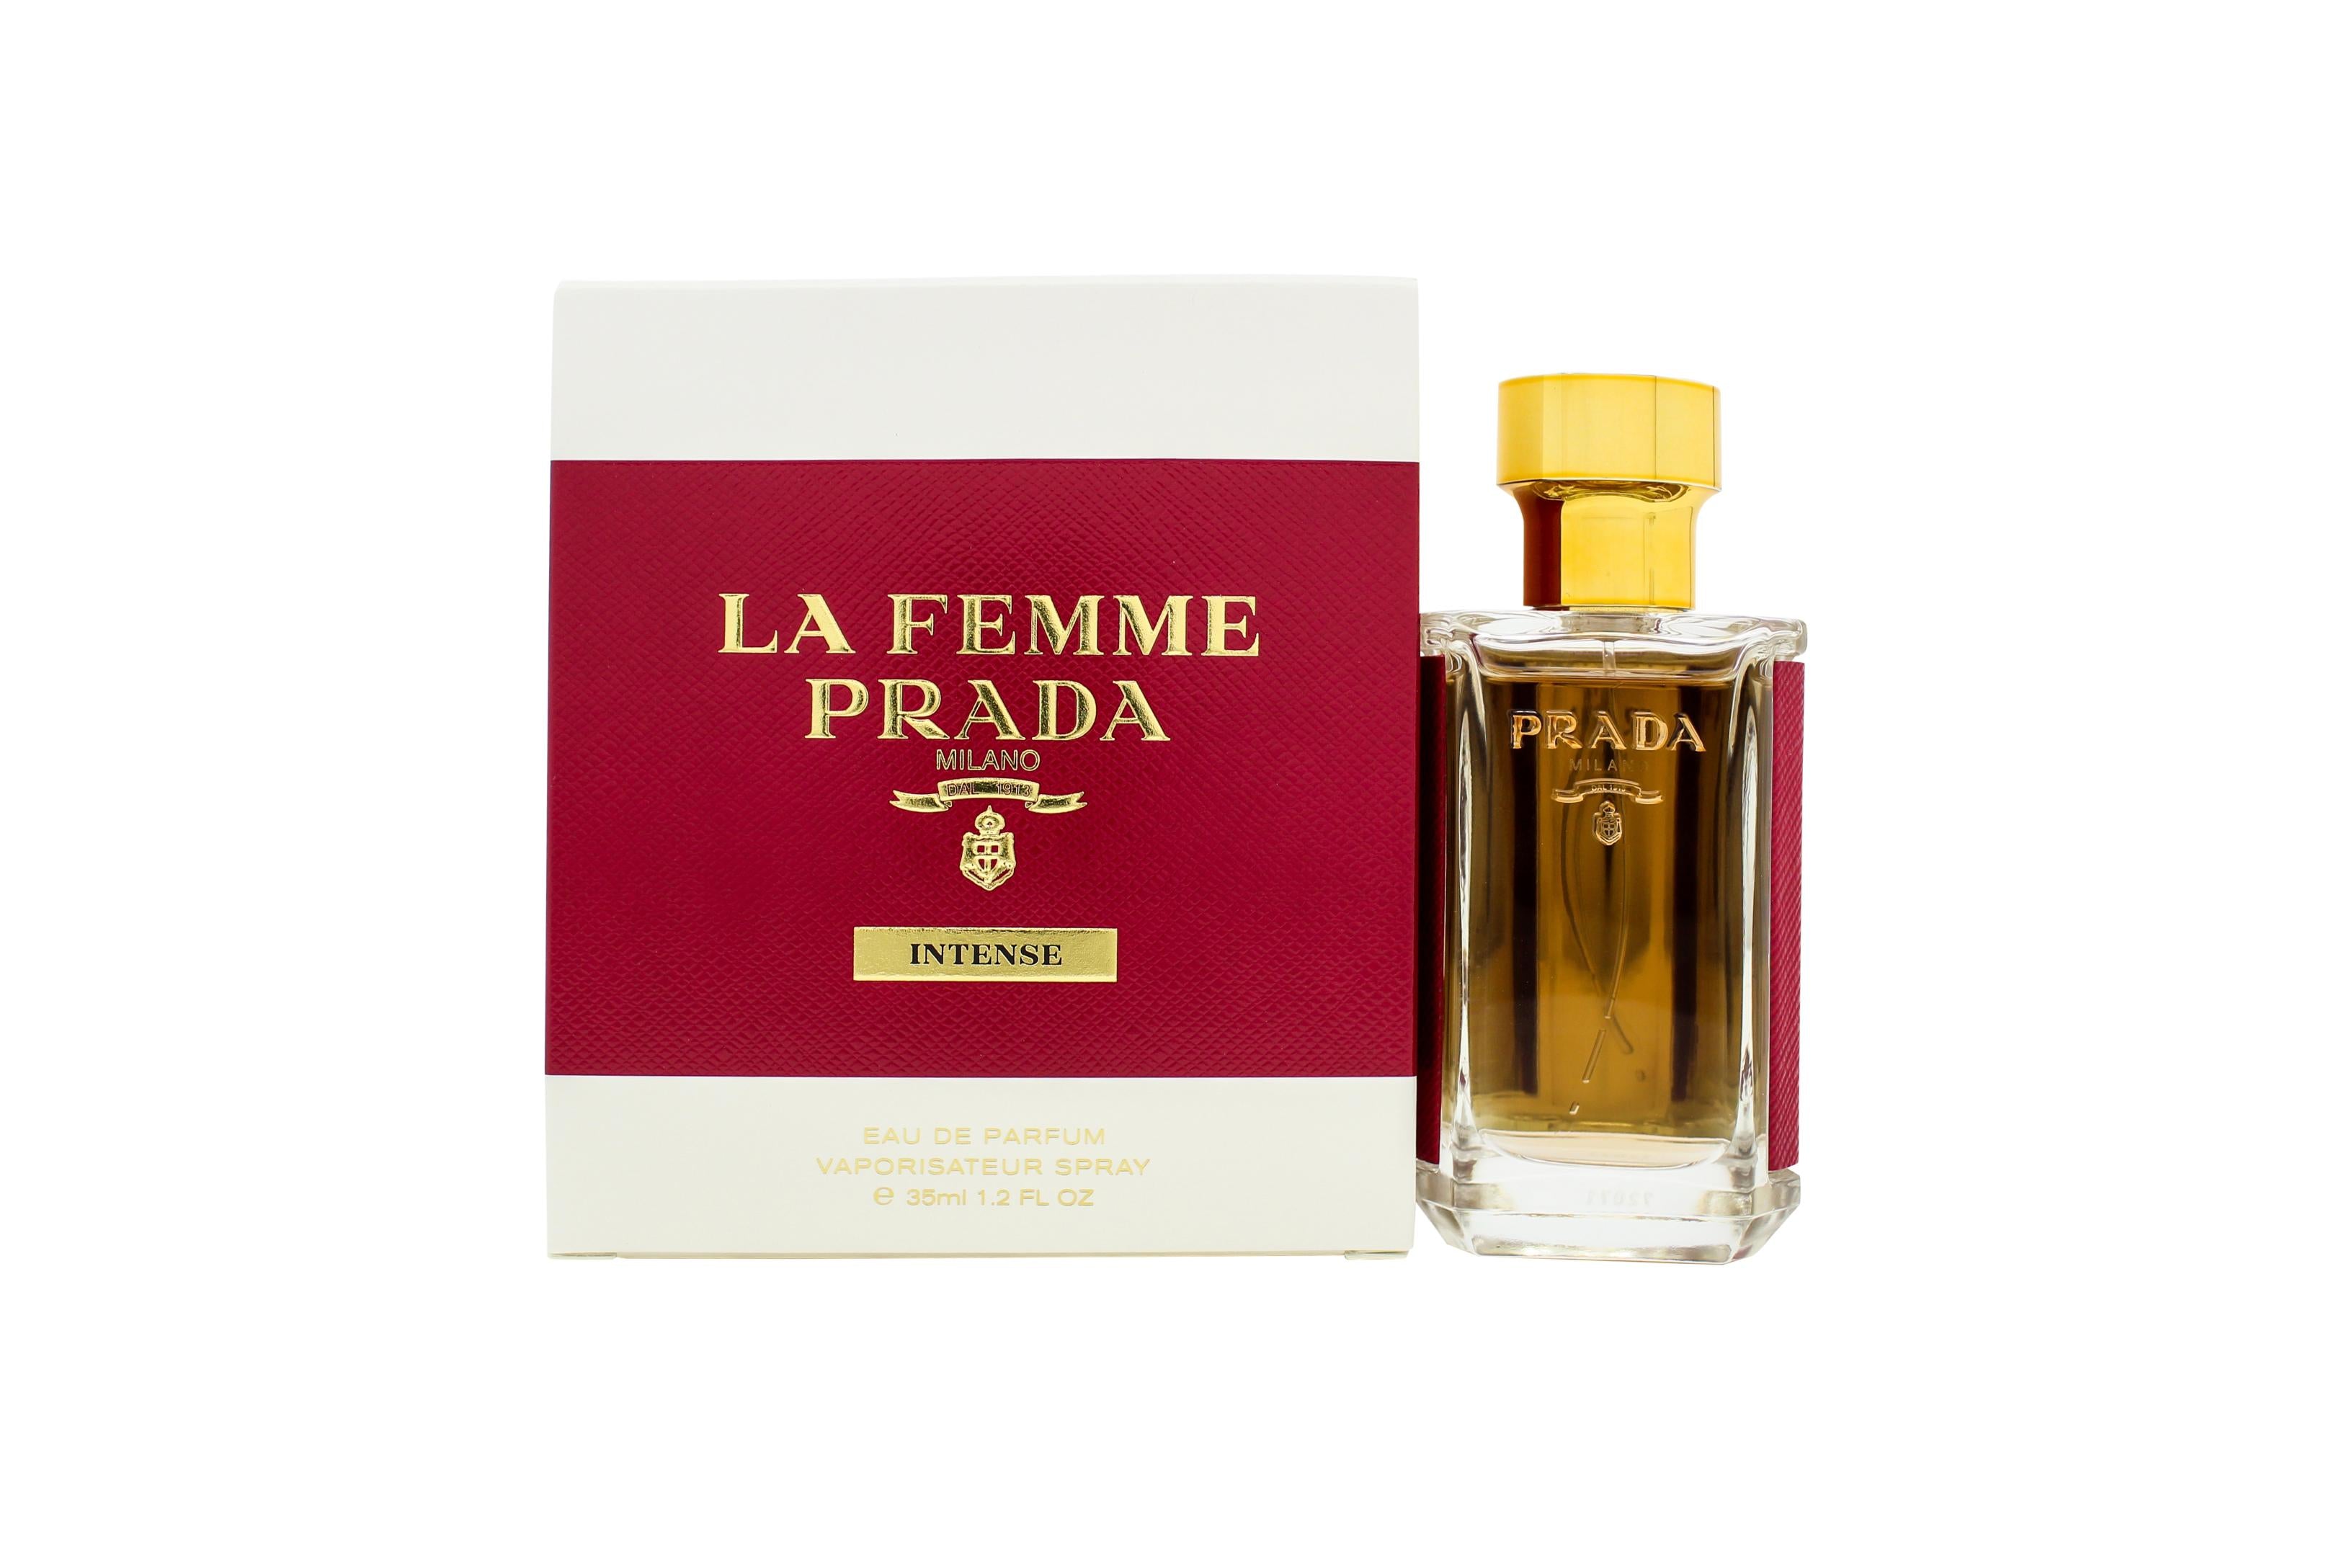 View Prada La Femme Intense Eau de Parfum 35ml Spray information